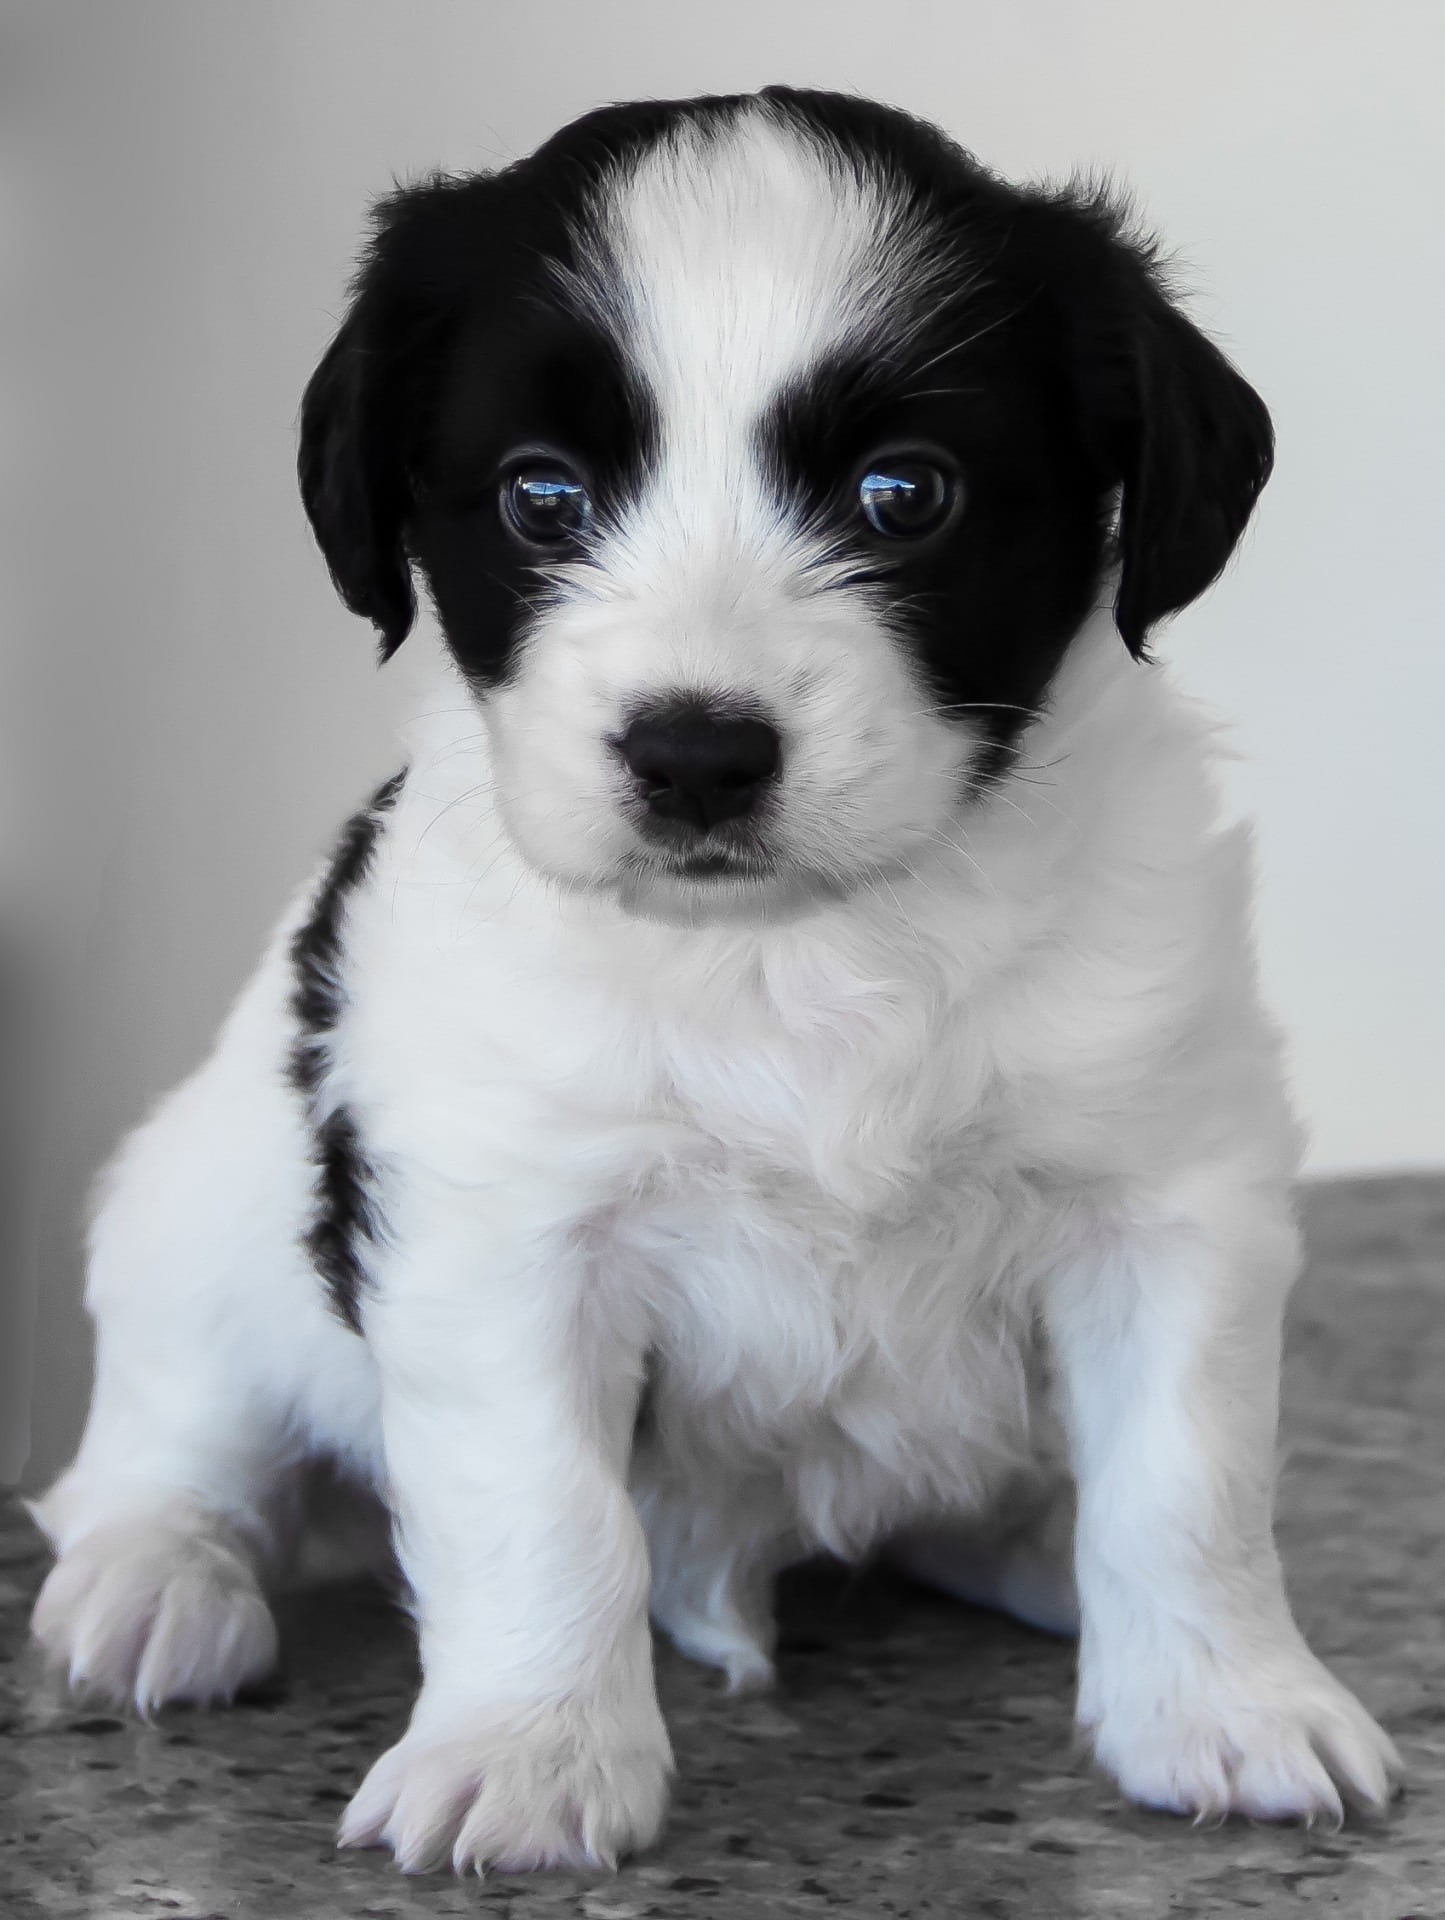 medium-coated white and black puppy, dog, pet, cute, baby, animal